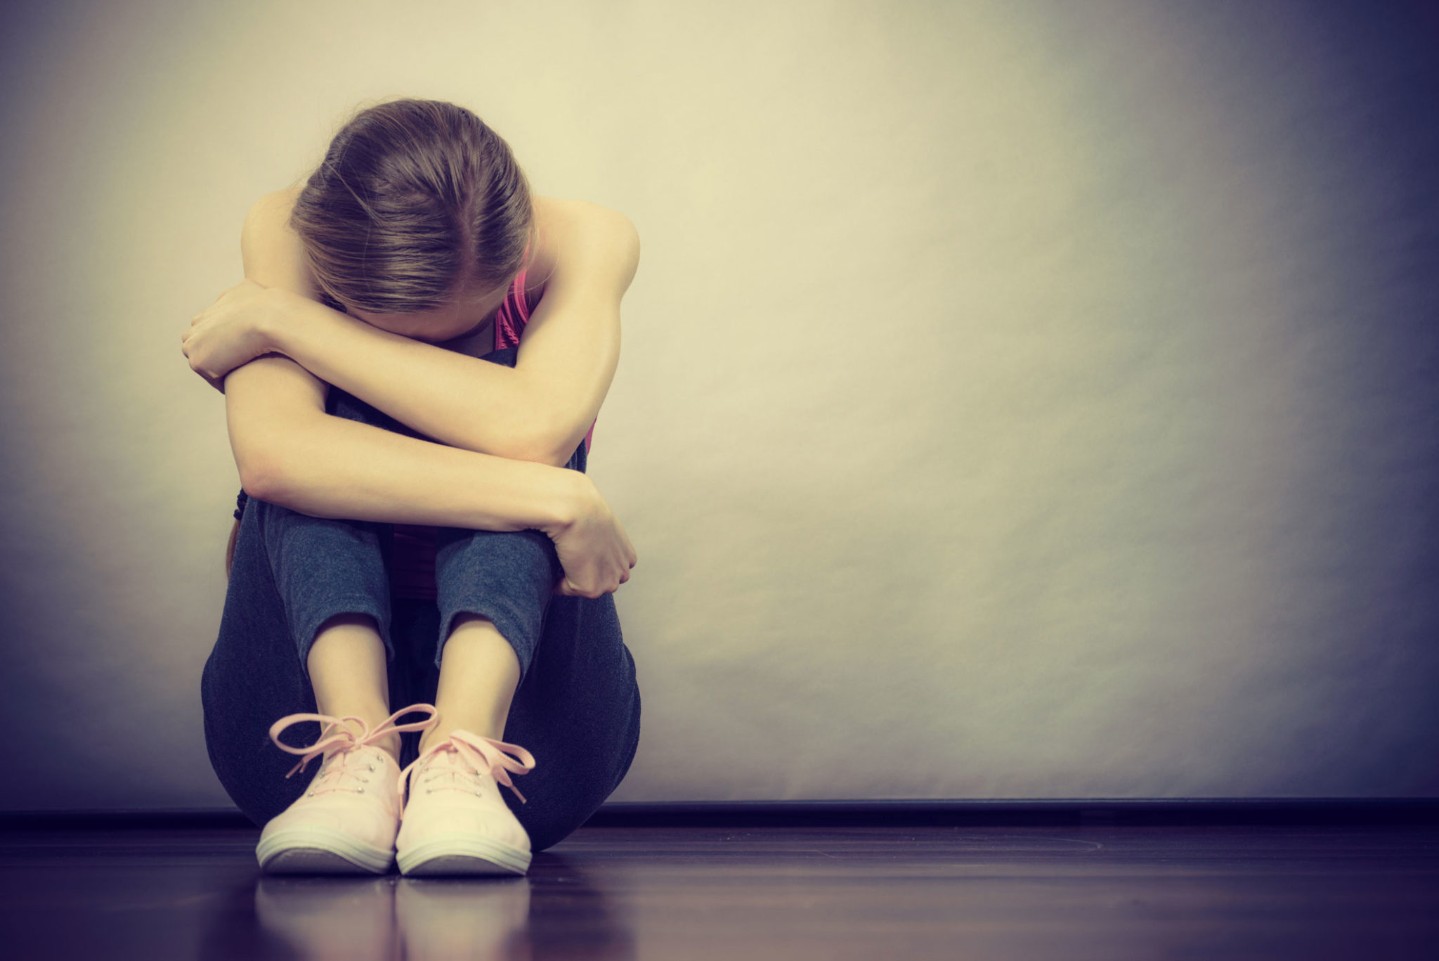 sad-girl-suicide-signs||Depressed Man||2014-08-14 14_17_14-Alegent Creighton Health||2014-08-14 14_17_14-Alegent Creighton Health